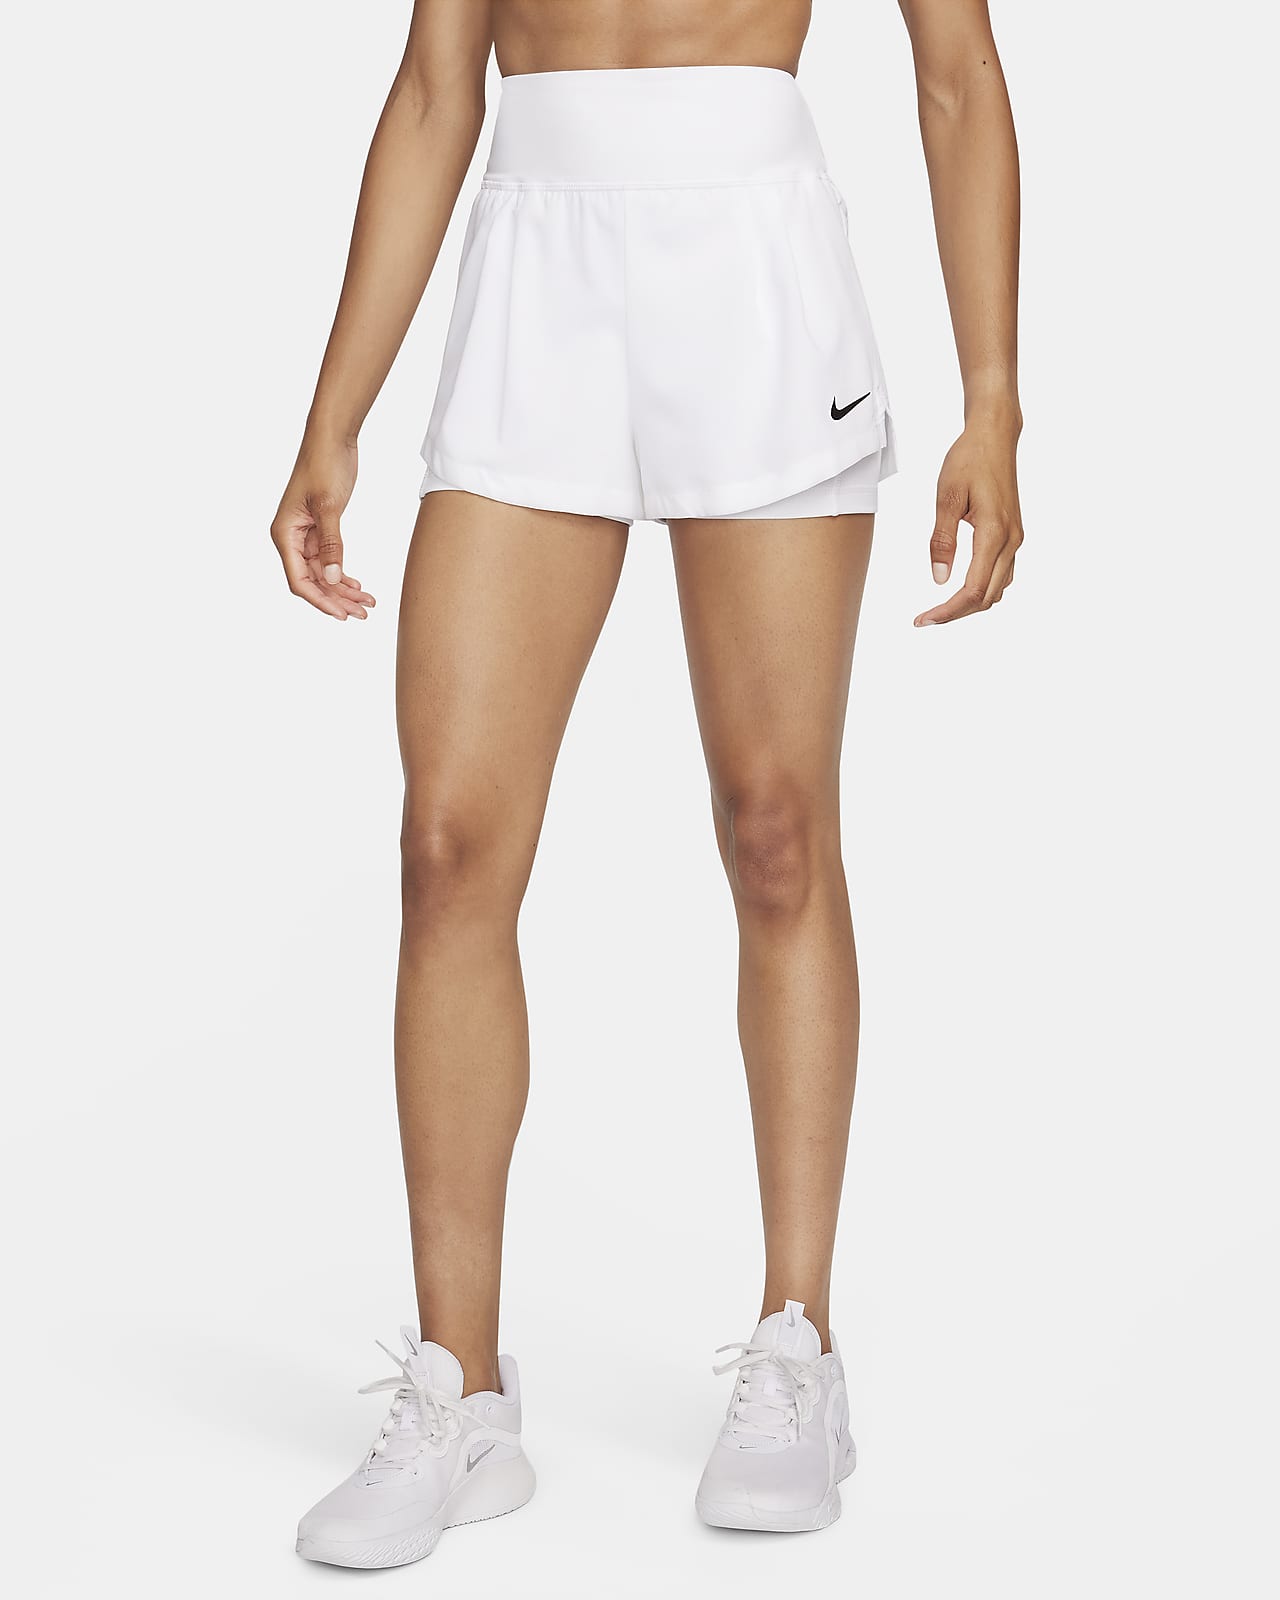 NikeCourt Advantage Women's Shorts